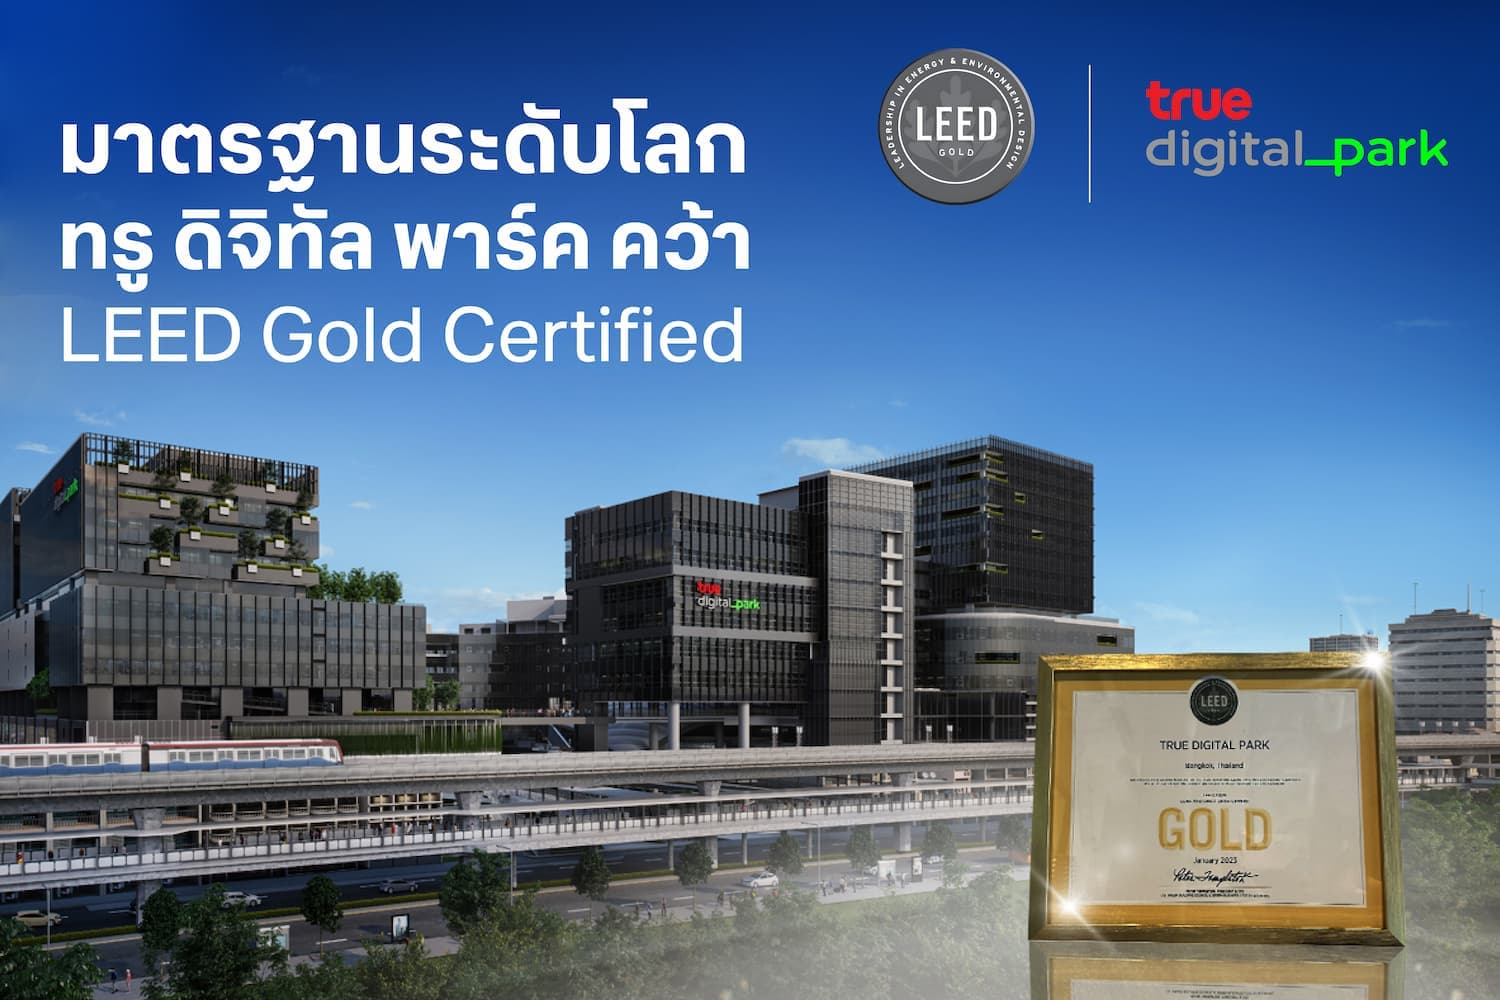 World-class green building standard... True Digital Park is LEED Gold Certified